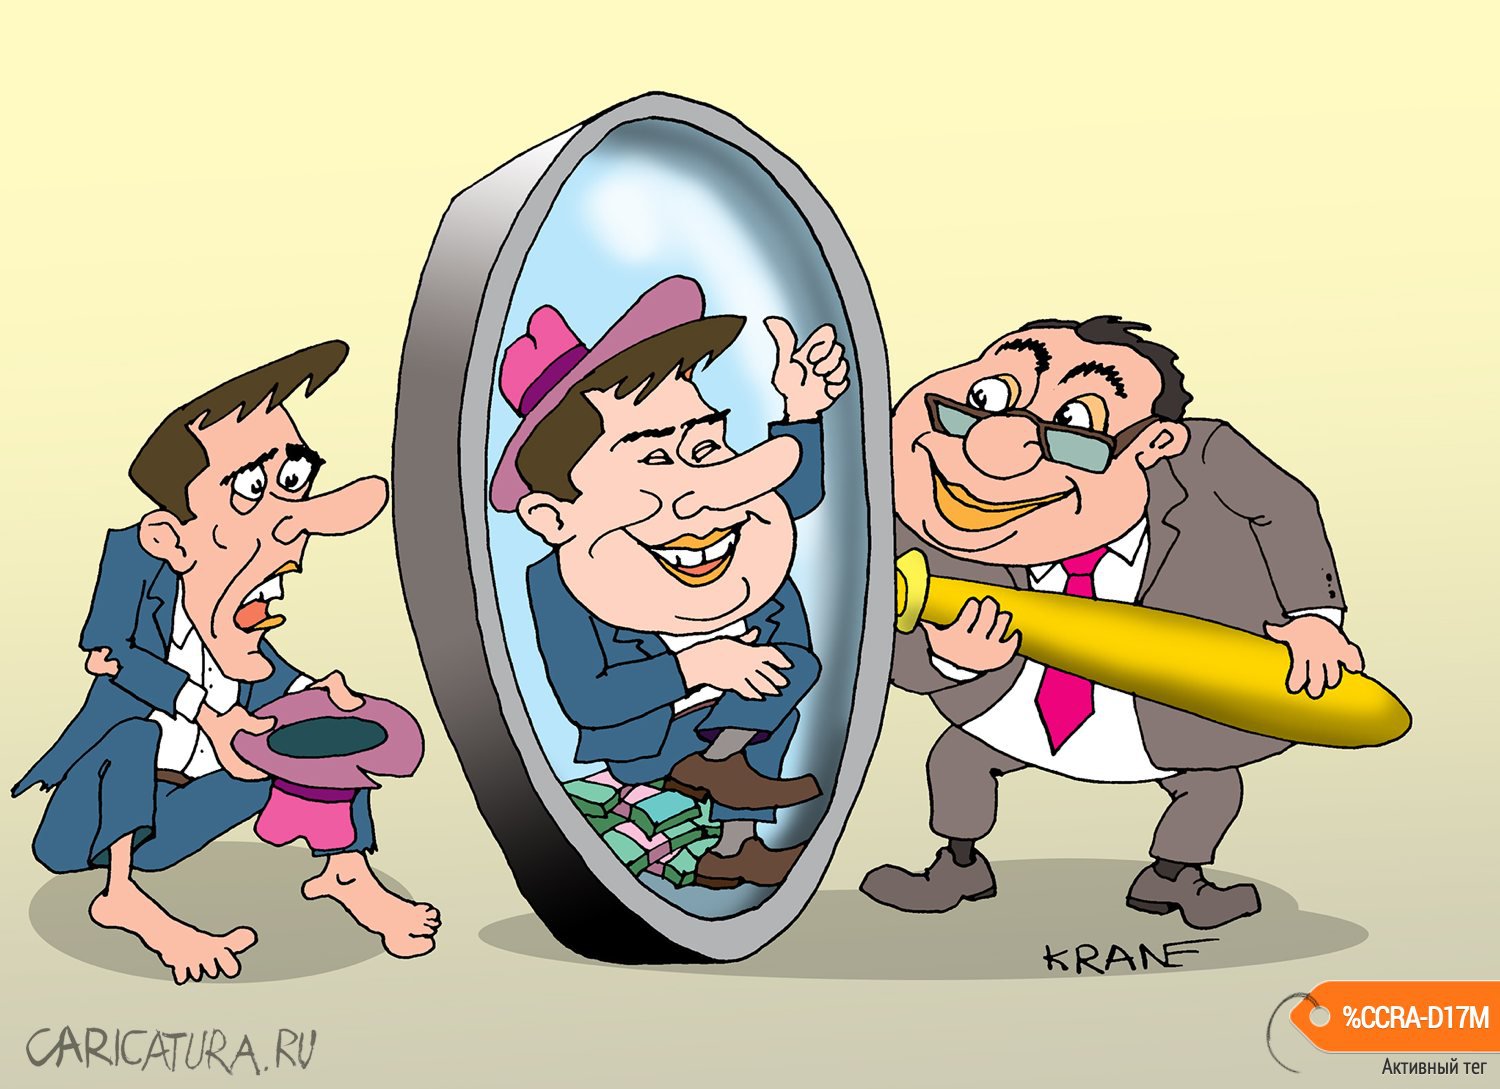 Карикатура "Статистика меняет способ подсчета", Евгений Кран